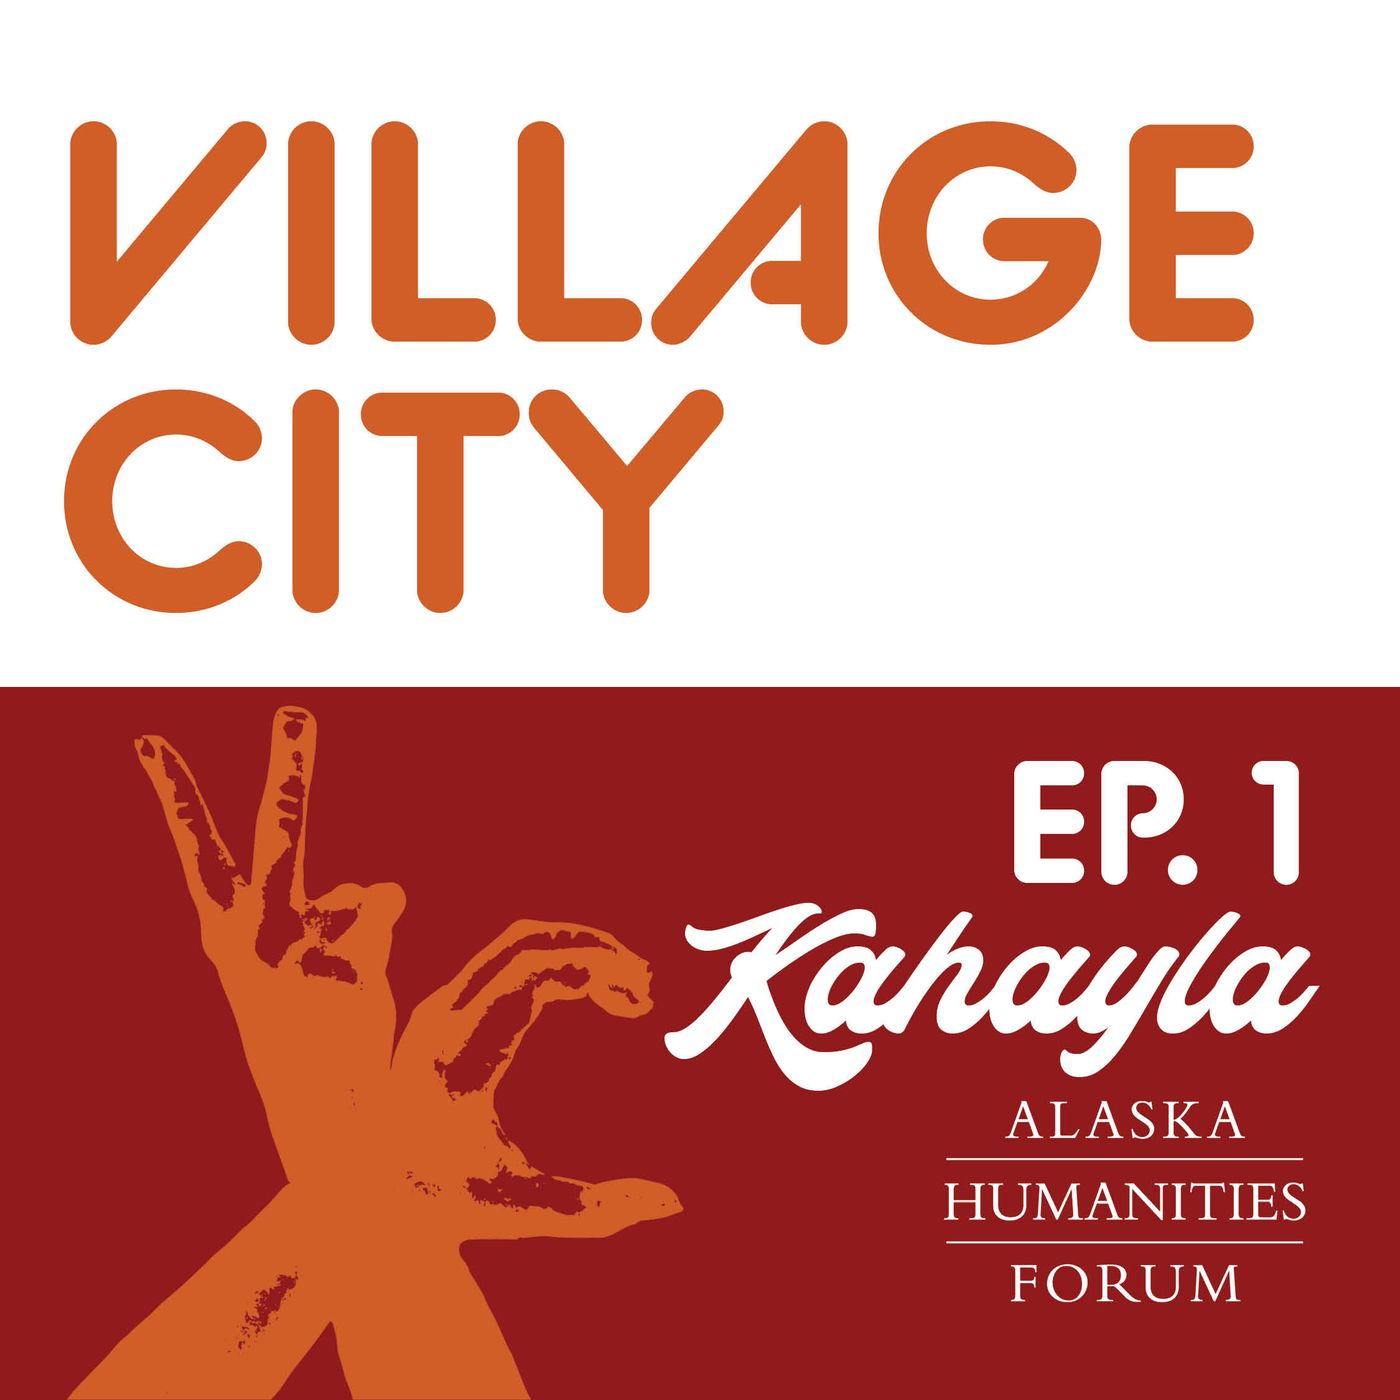 Village City - Ep. 1 feat. Kahayla Green